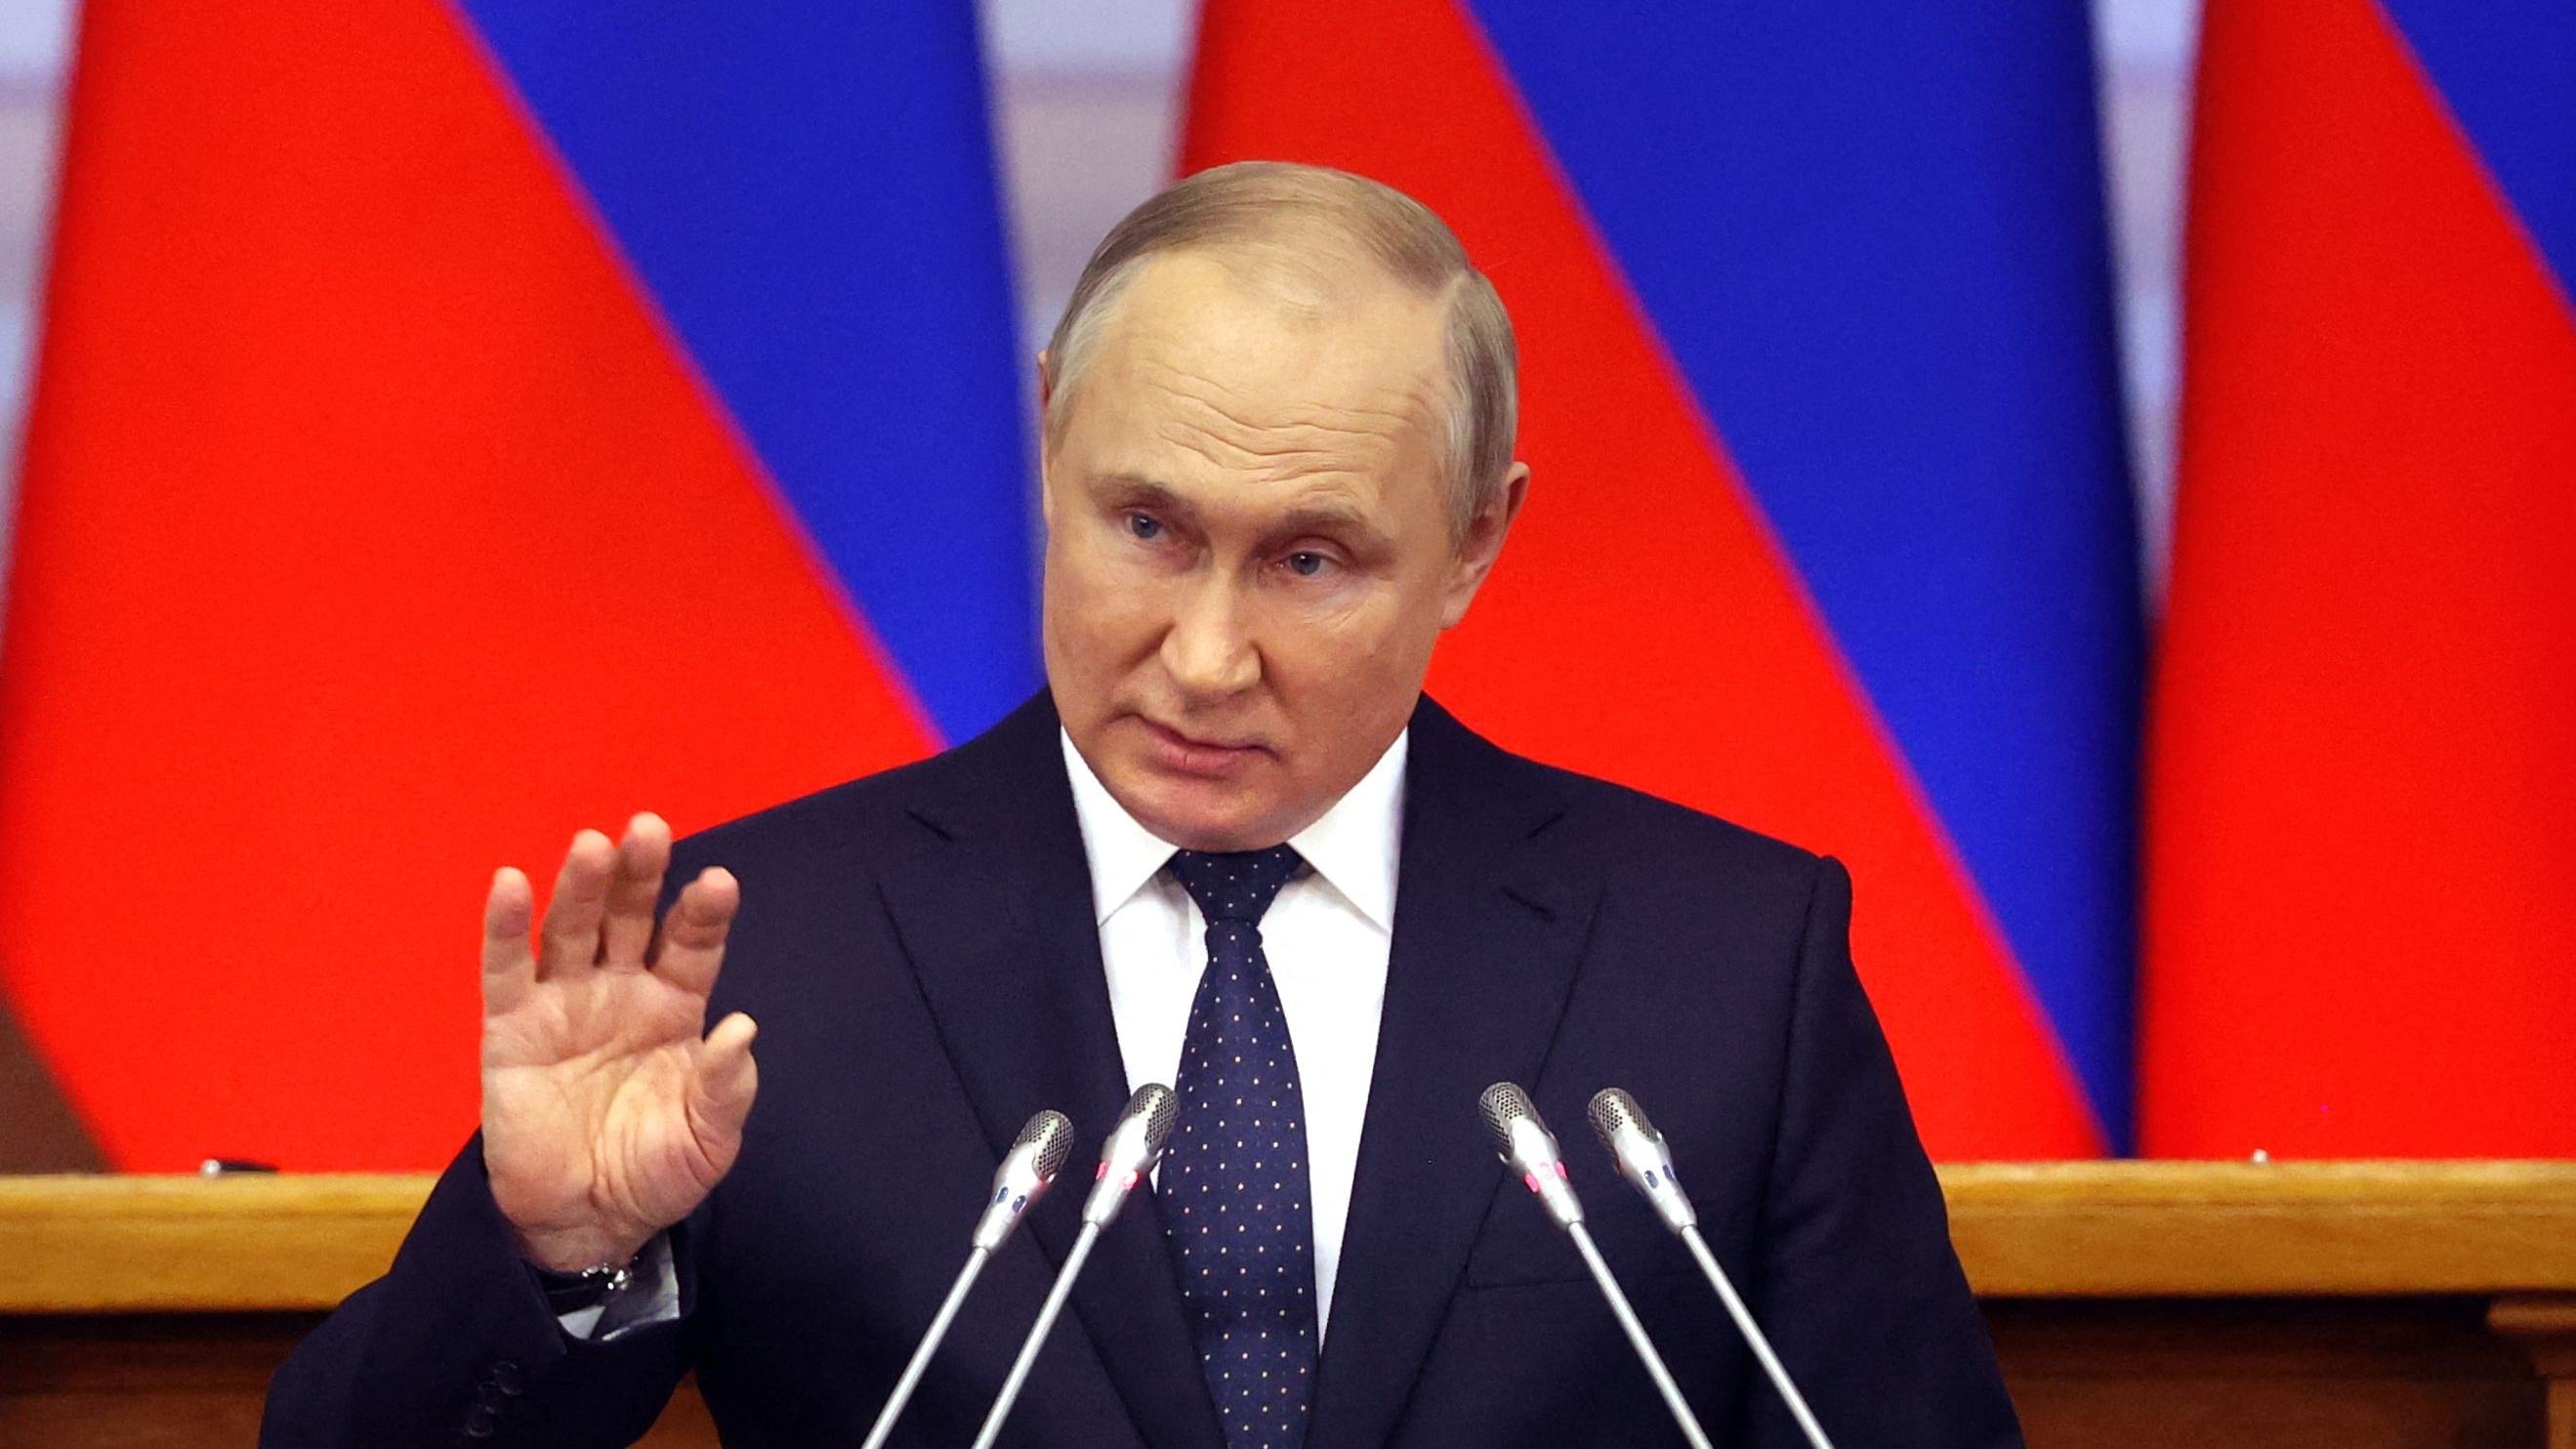 Vladimir Putin has previously deployed ‘extreme measures’ to crush opposition